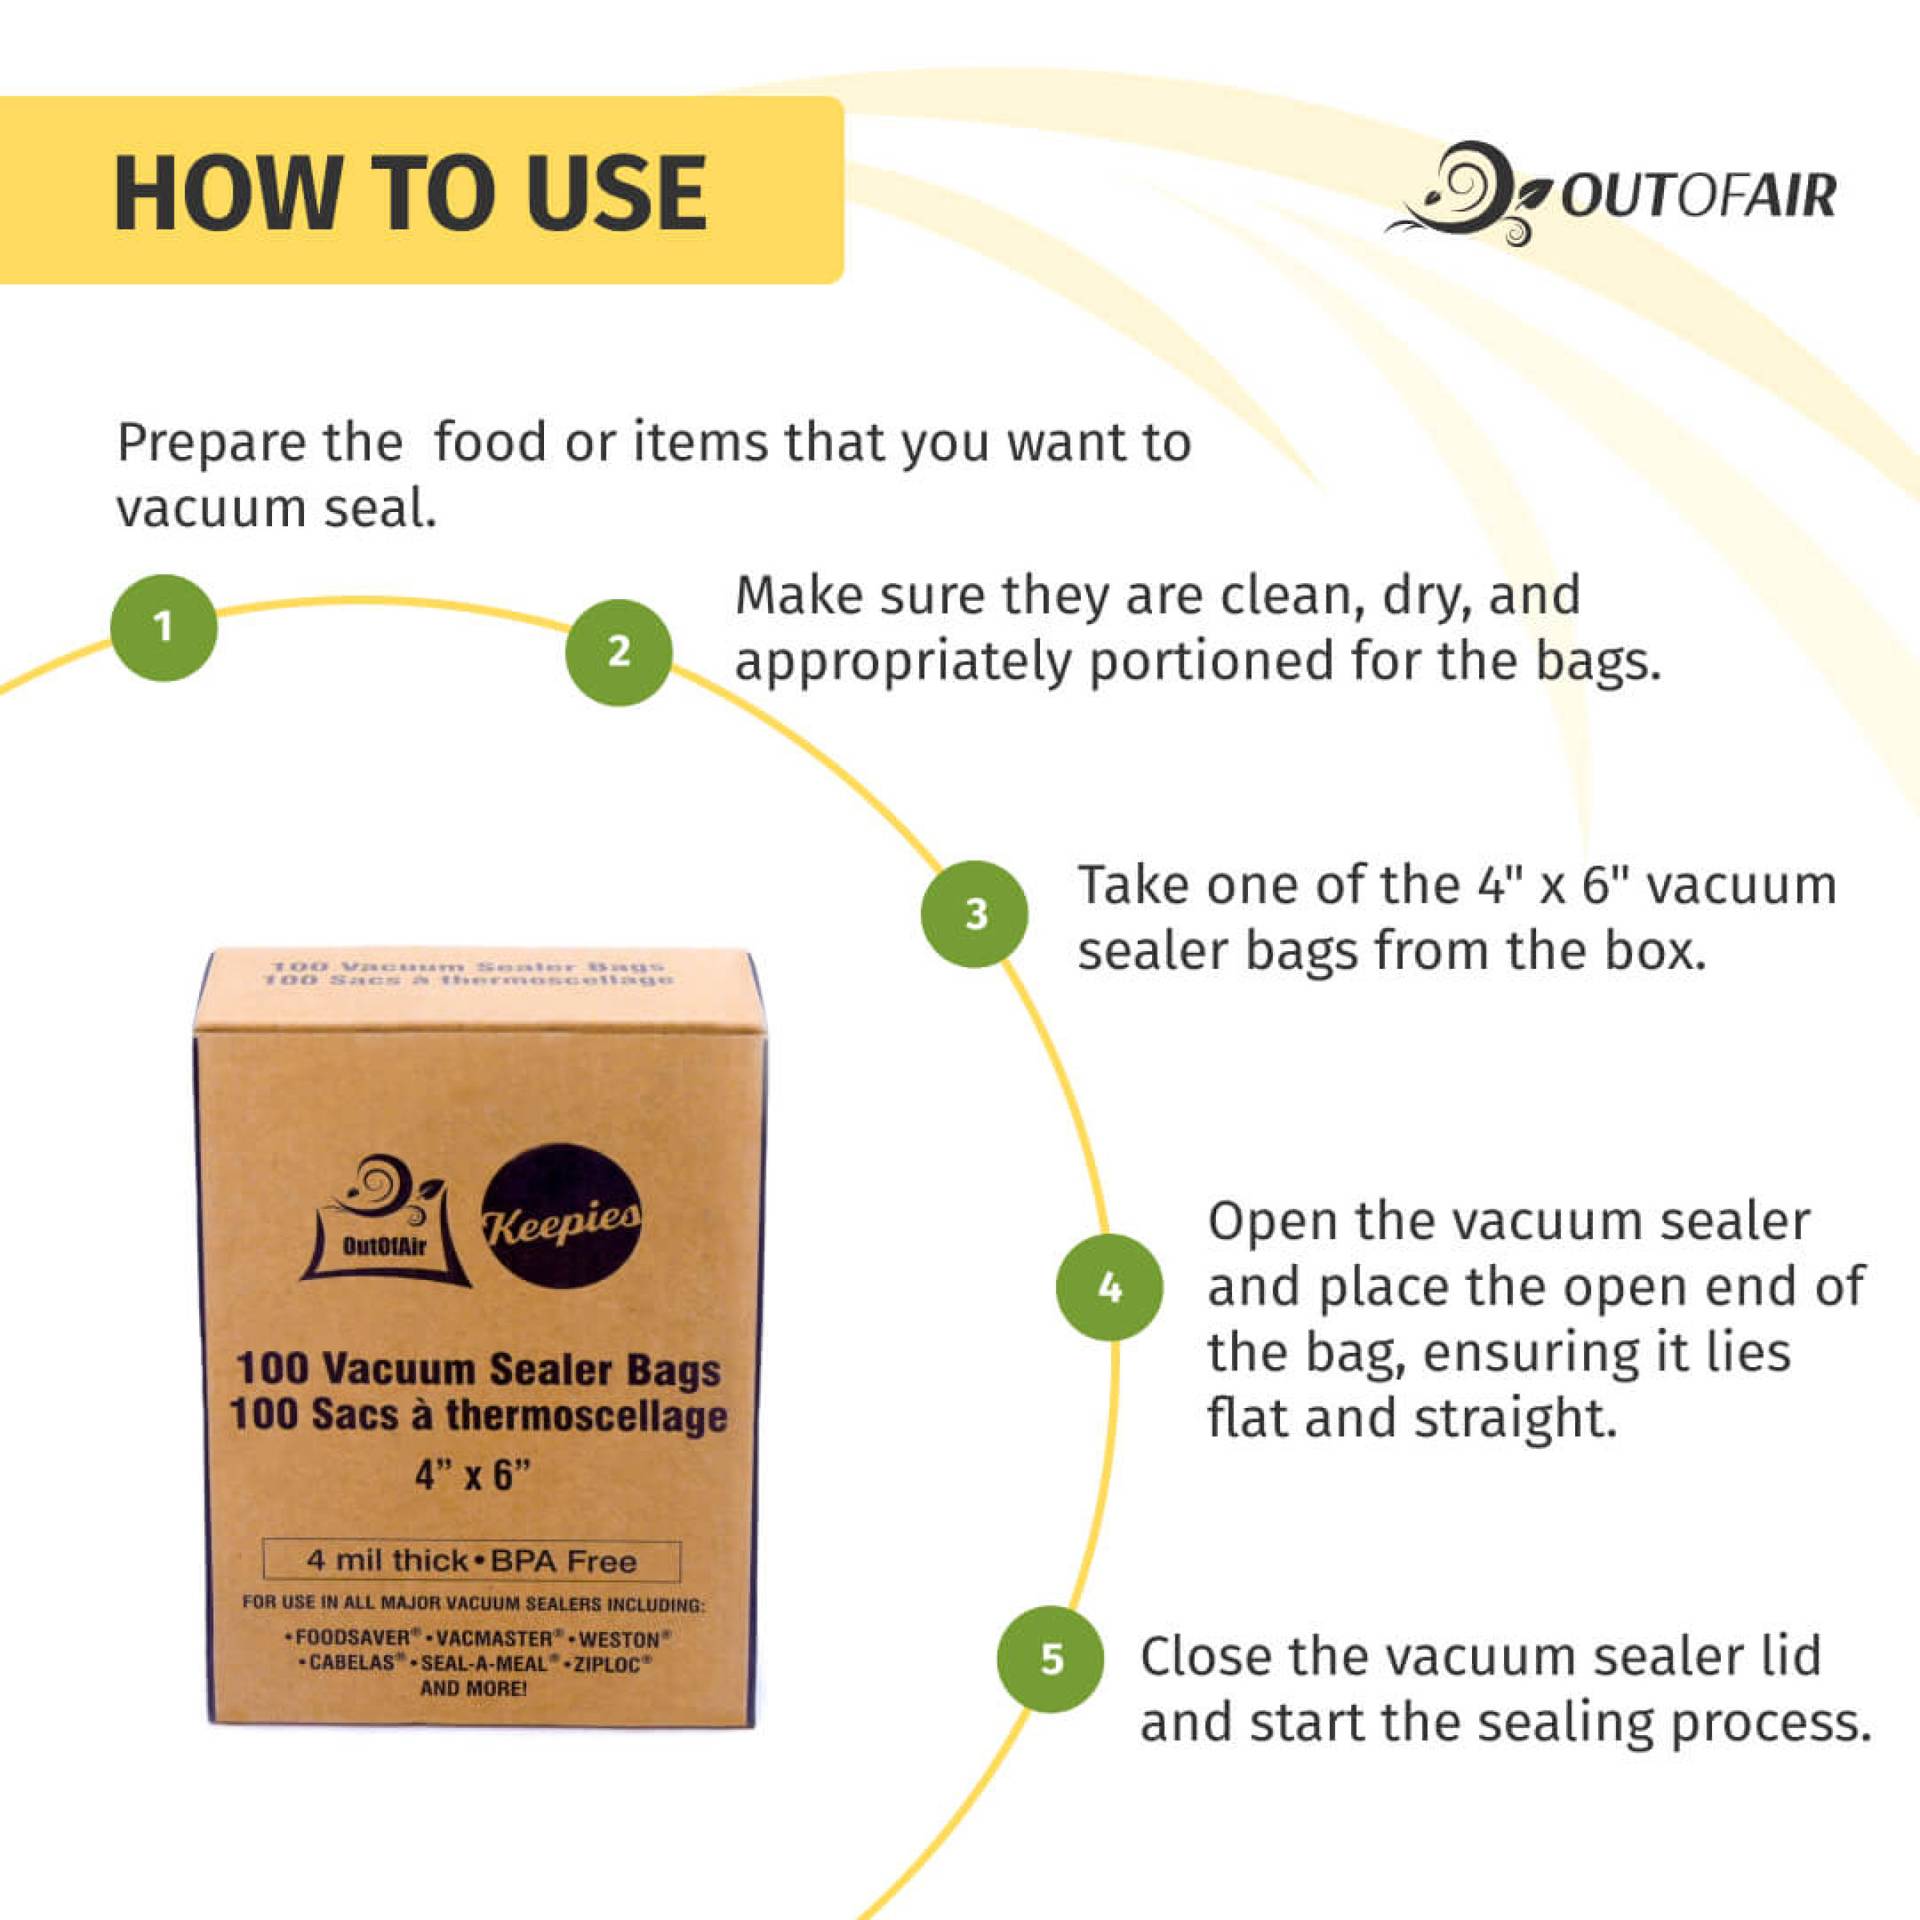 Gallon Size 11x16 Vacuum Seal Bags - 500 Bag Bulk Case - OutOfAir